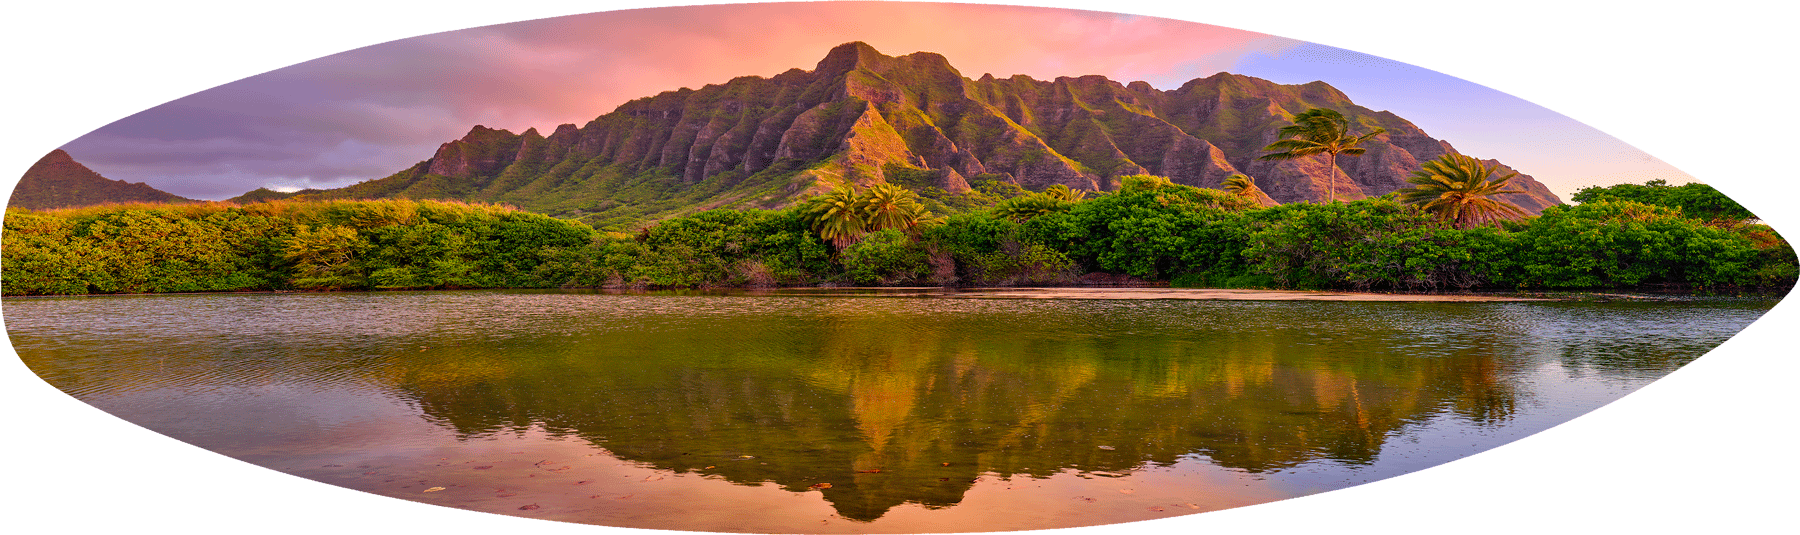 an award winning photograph of the koolau mauntains on the hawaiian island of Oahu at sunrise.  Oahu landscape photography by Andrew Shoemaker